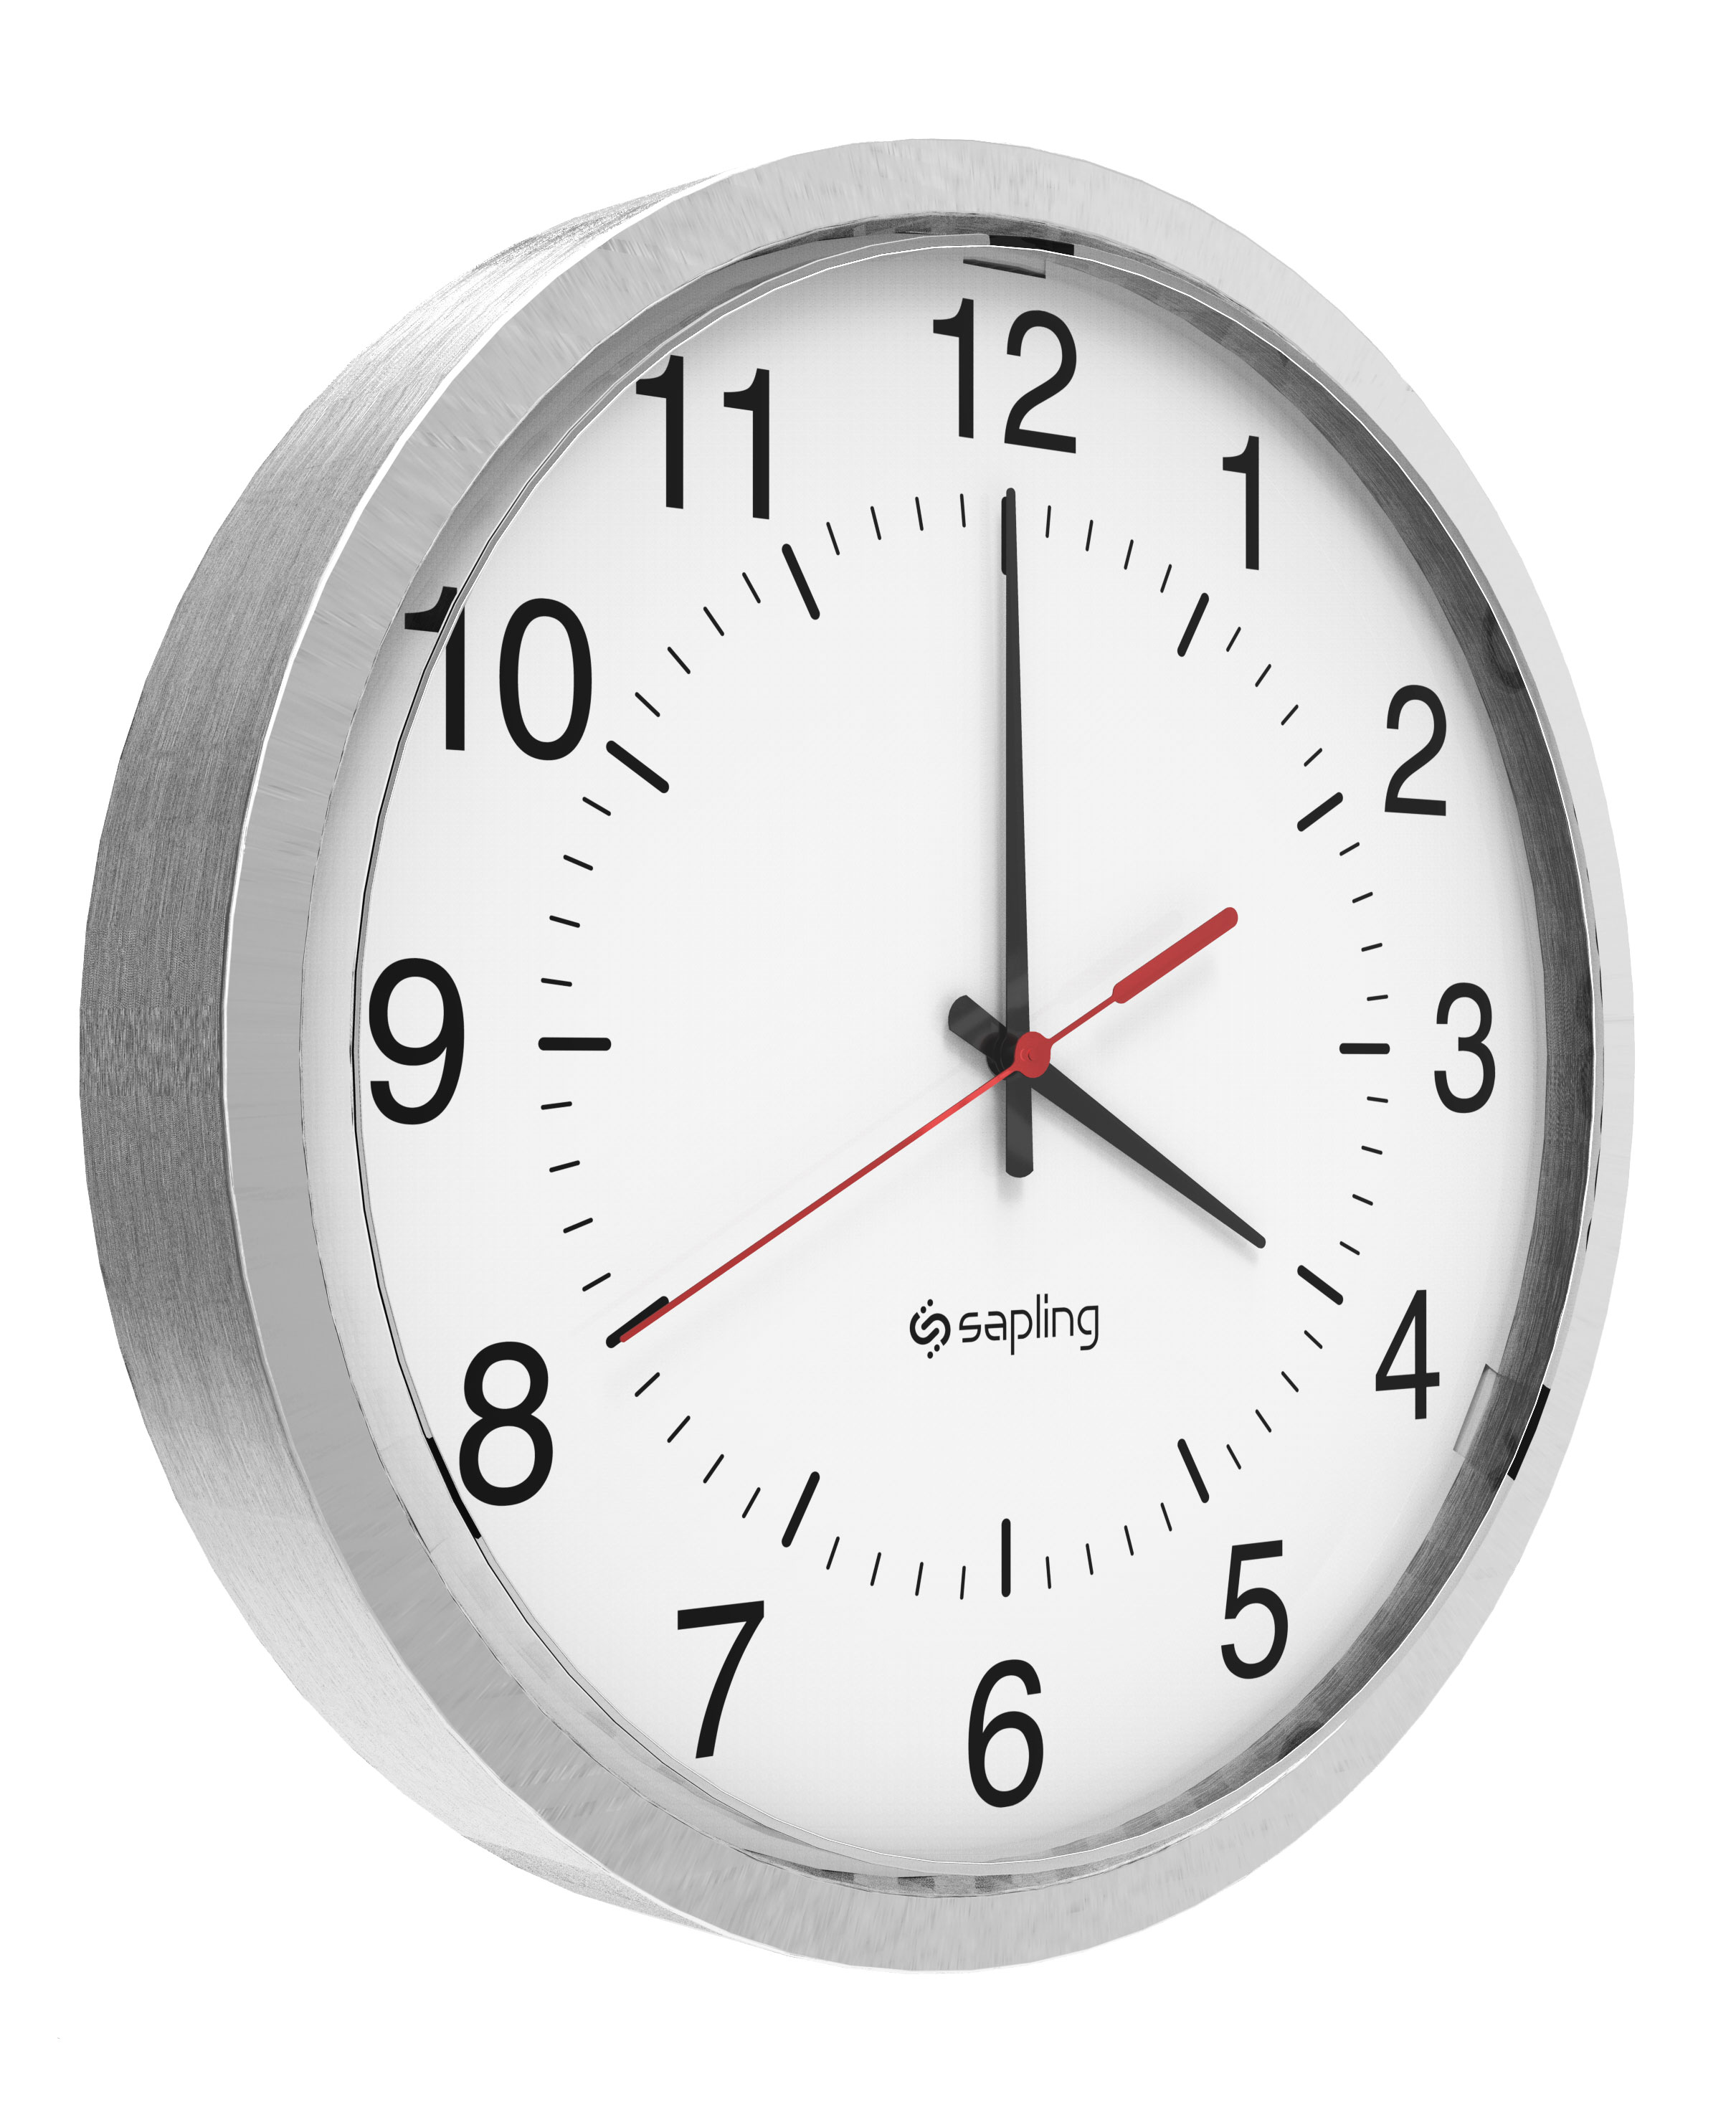 Analog Clocks | Analog Synchronized Clock Systems by Sapling Clocks ...